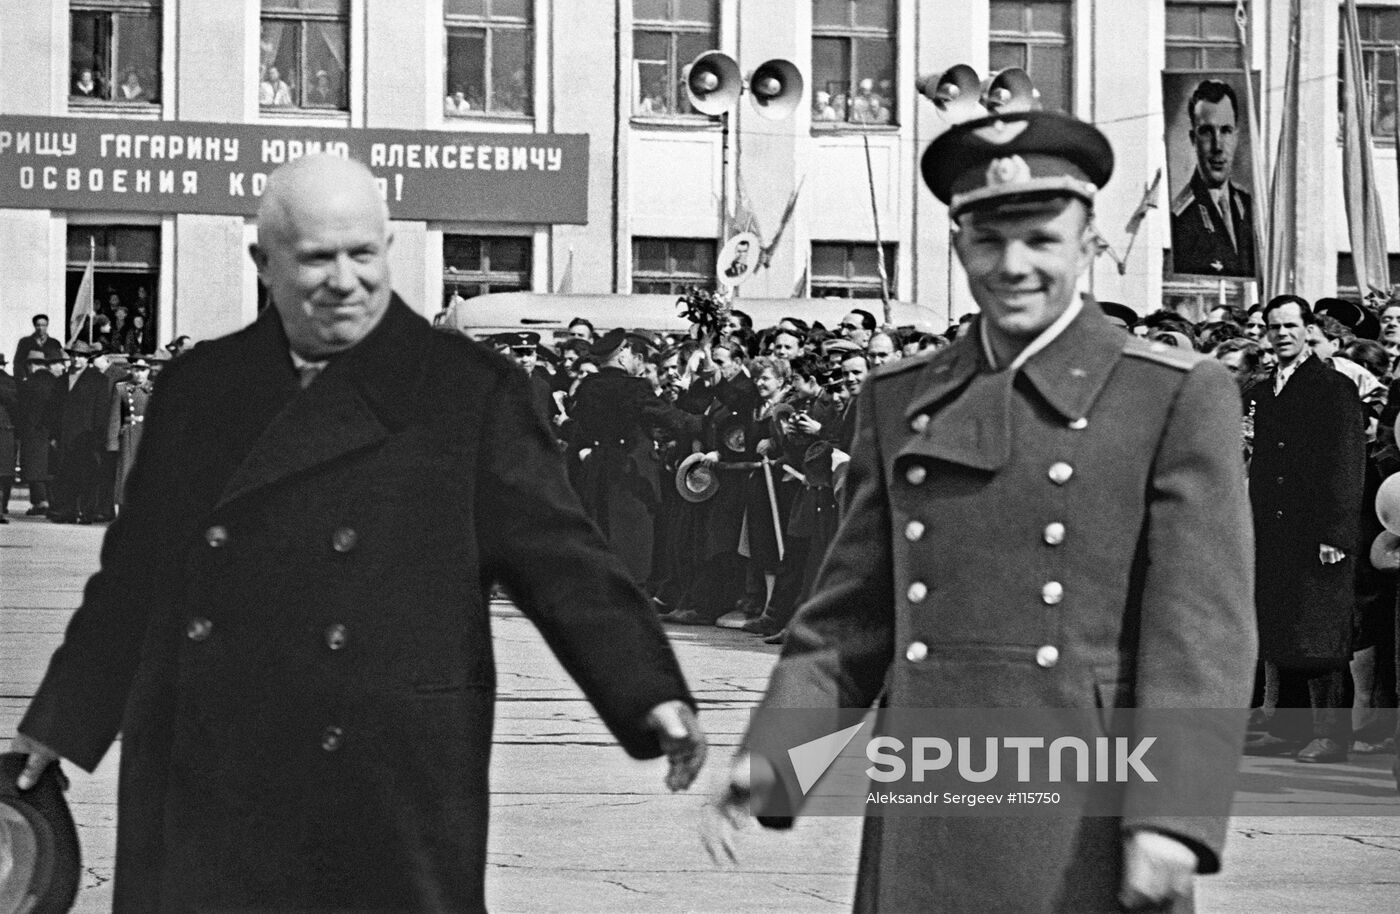 Gagarin Khrushchev after flight